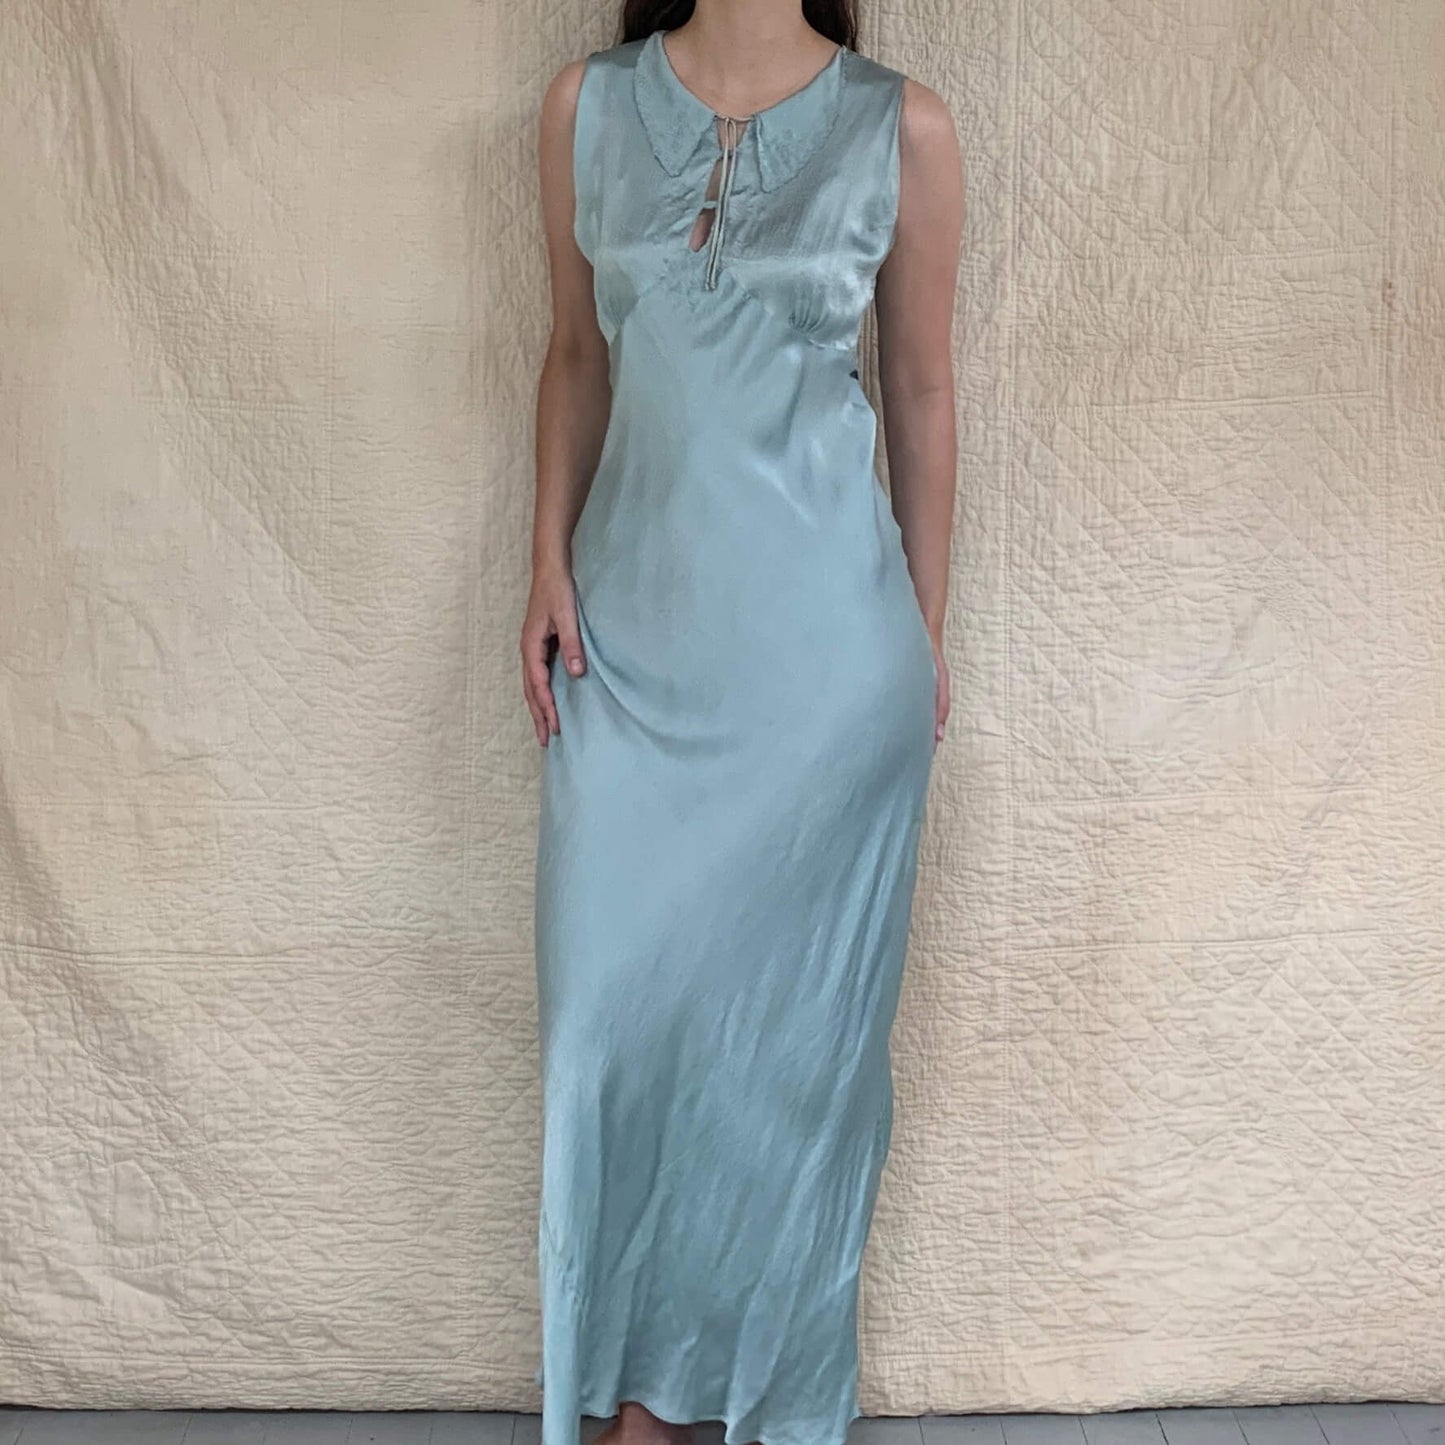 full length view of the vintage silk bias cut dress